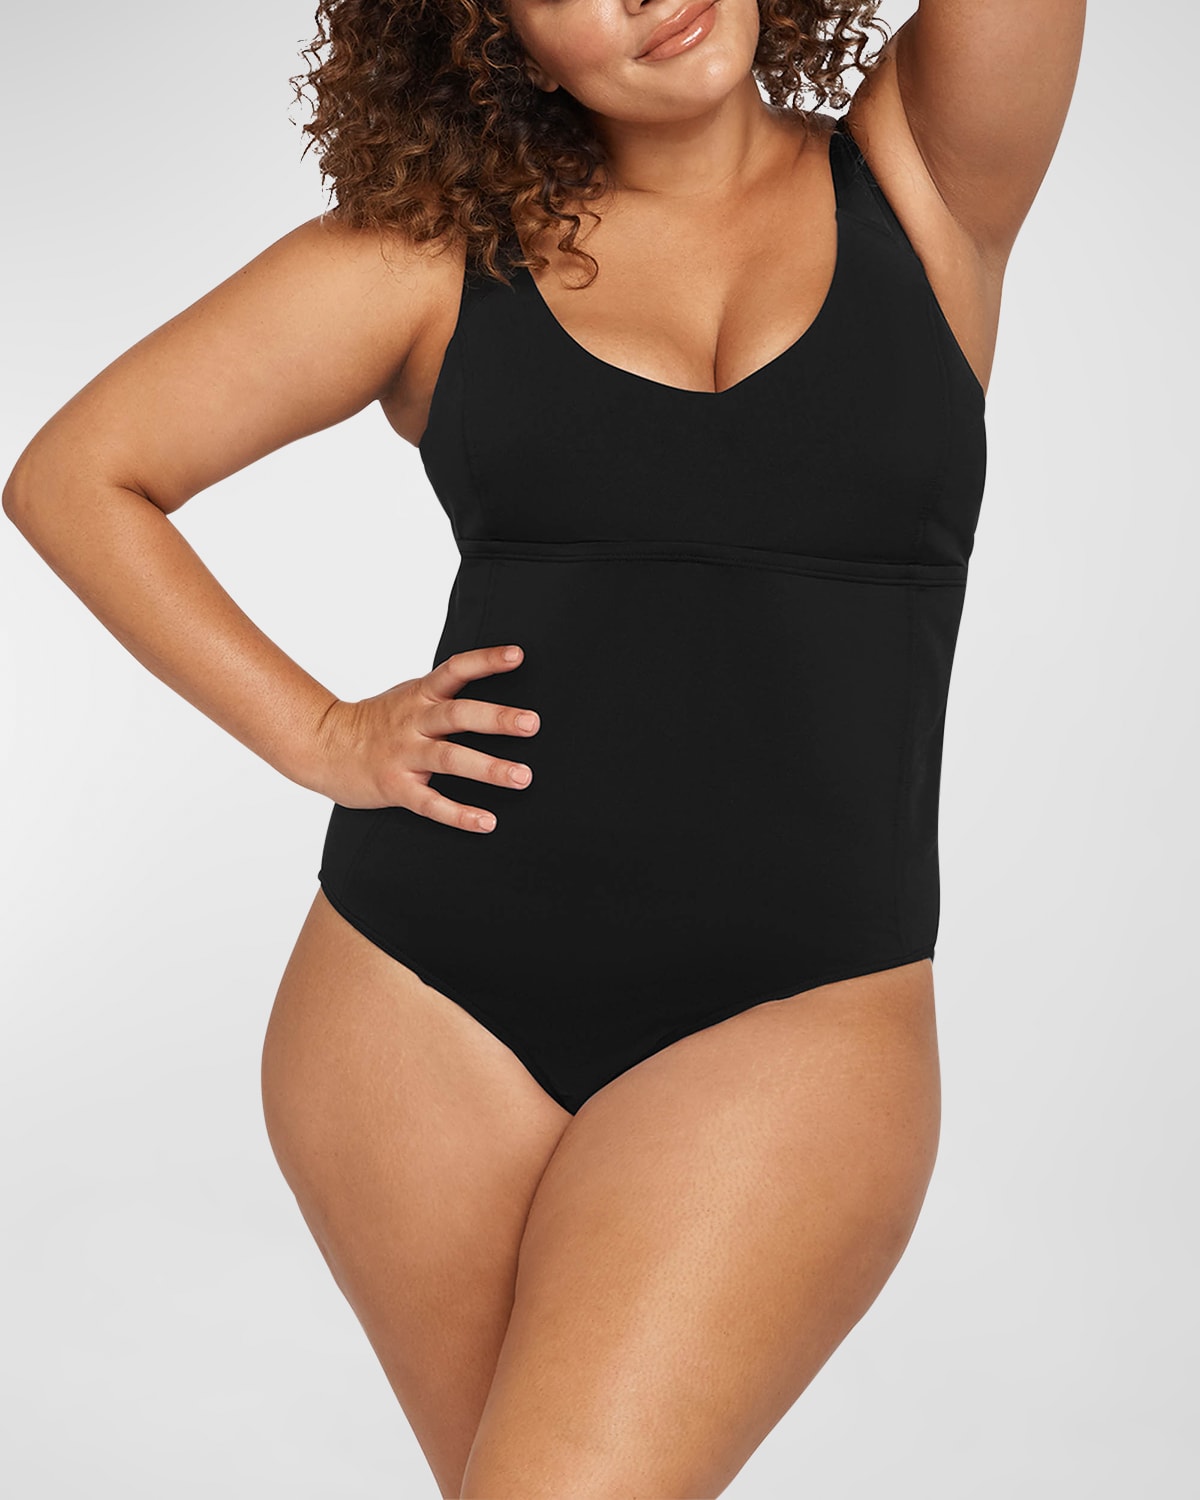 Artesands Plus Size Turner Chlorine-Resistant One-Piece Swimsuit